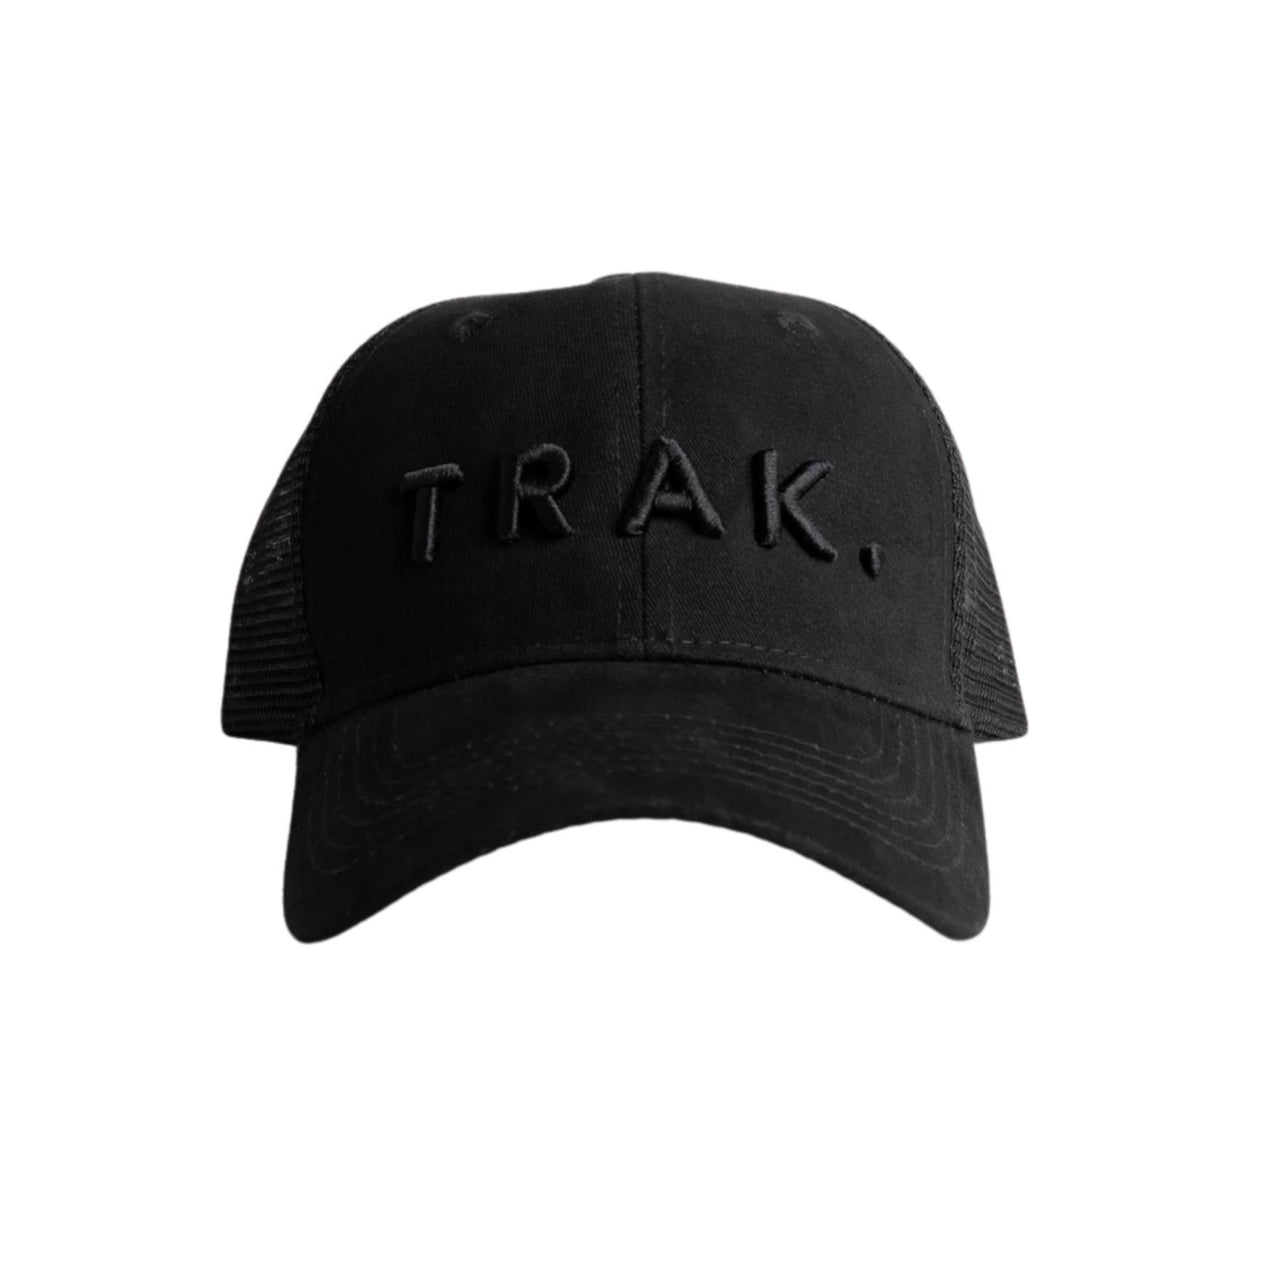 Trak Athletic Logo Trucker Cap | Black